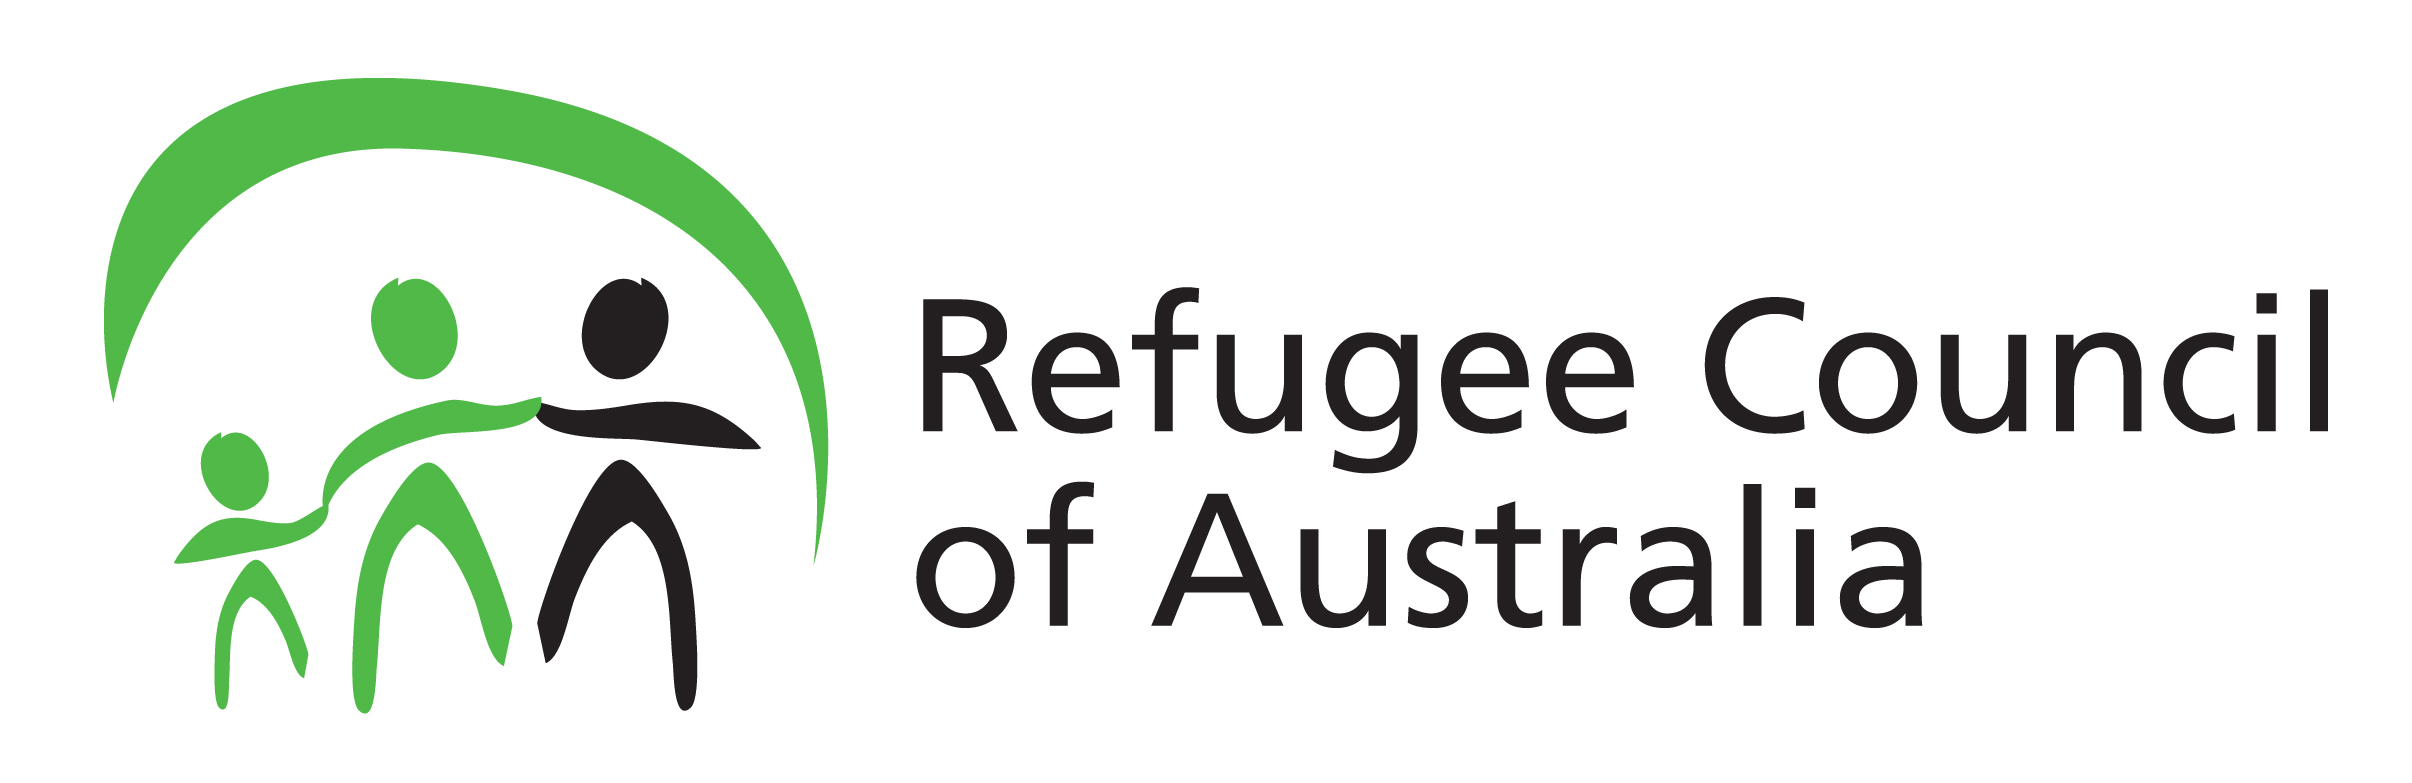 The Refugee Council of Australia logo